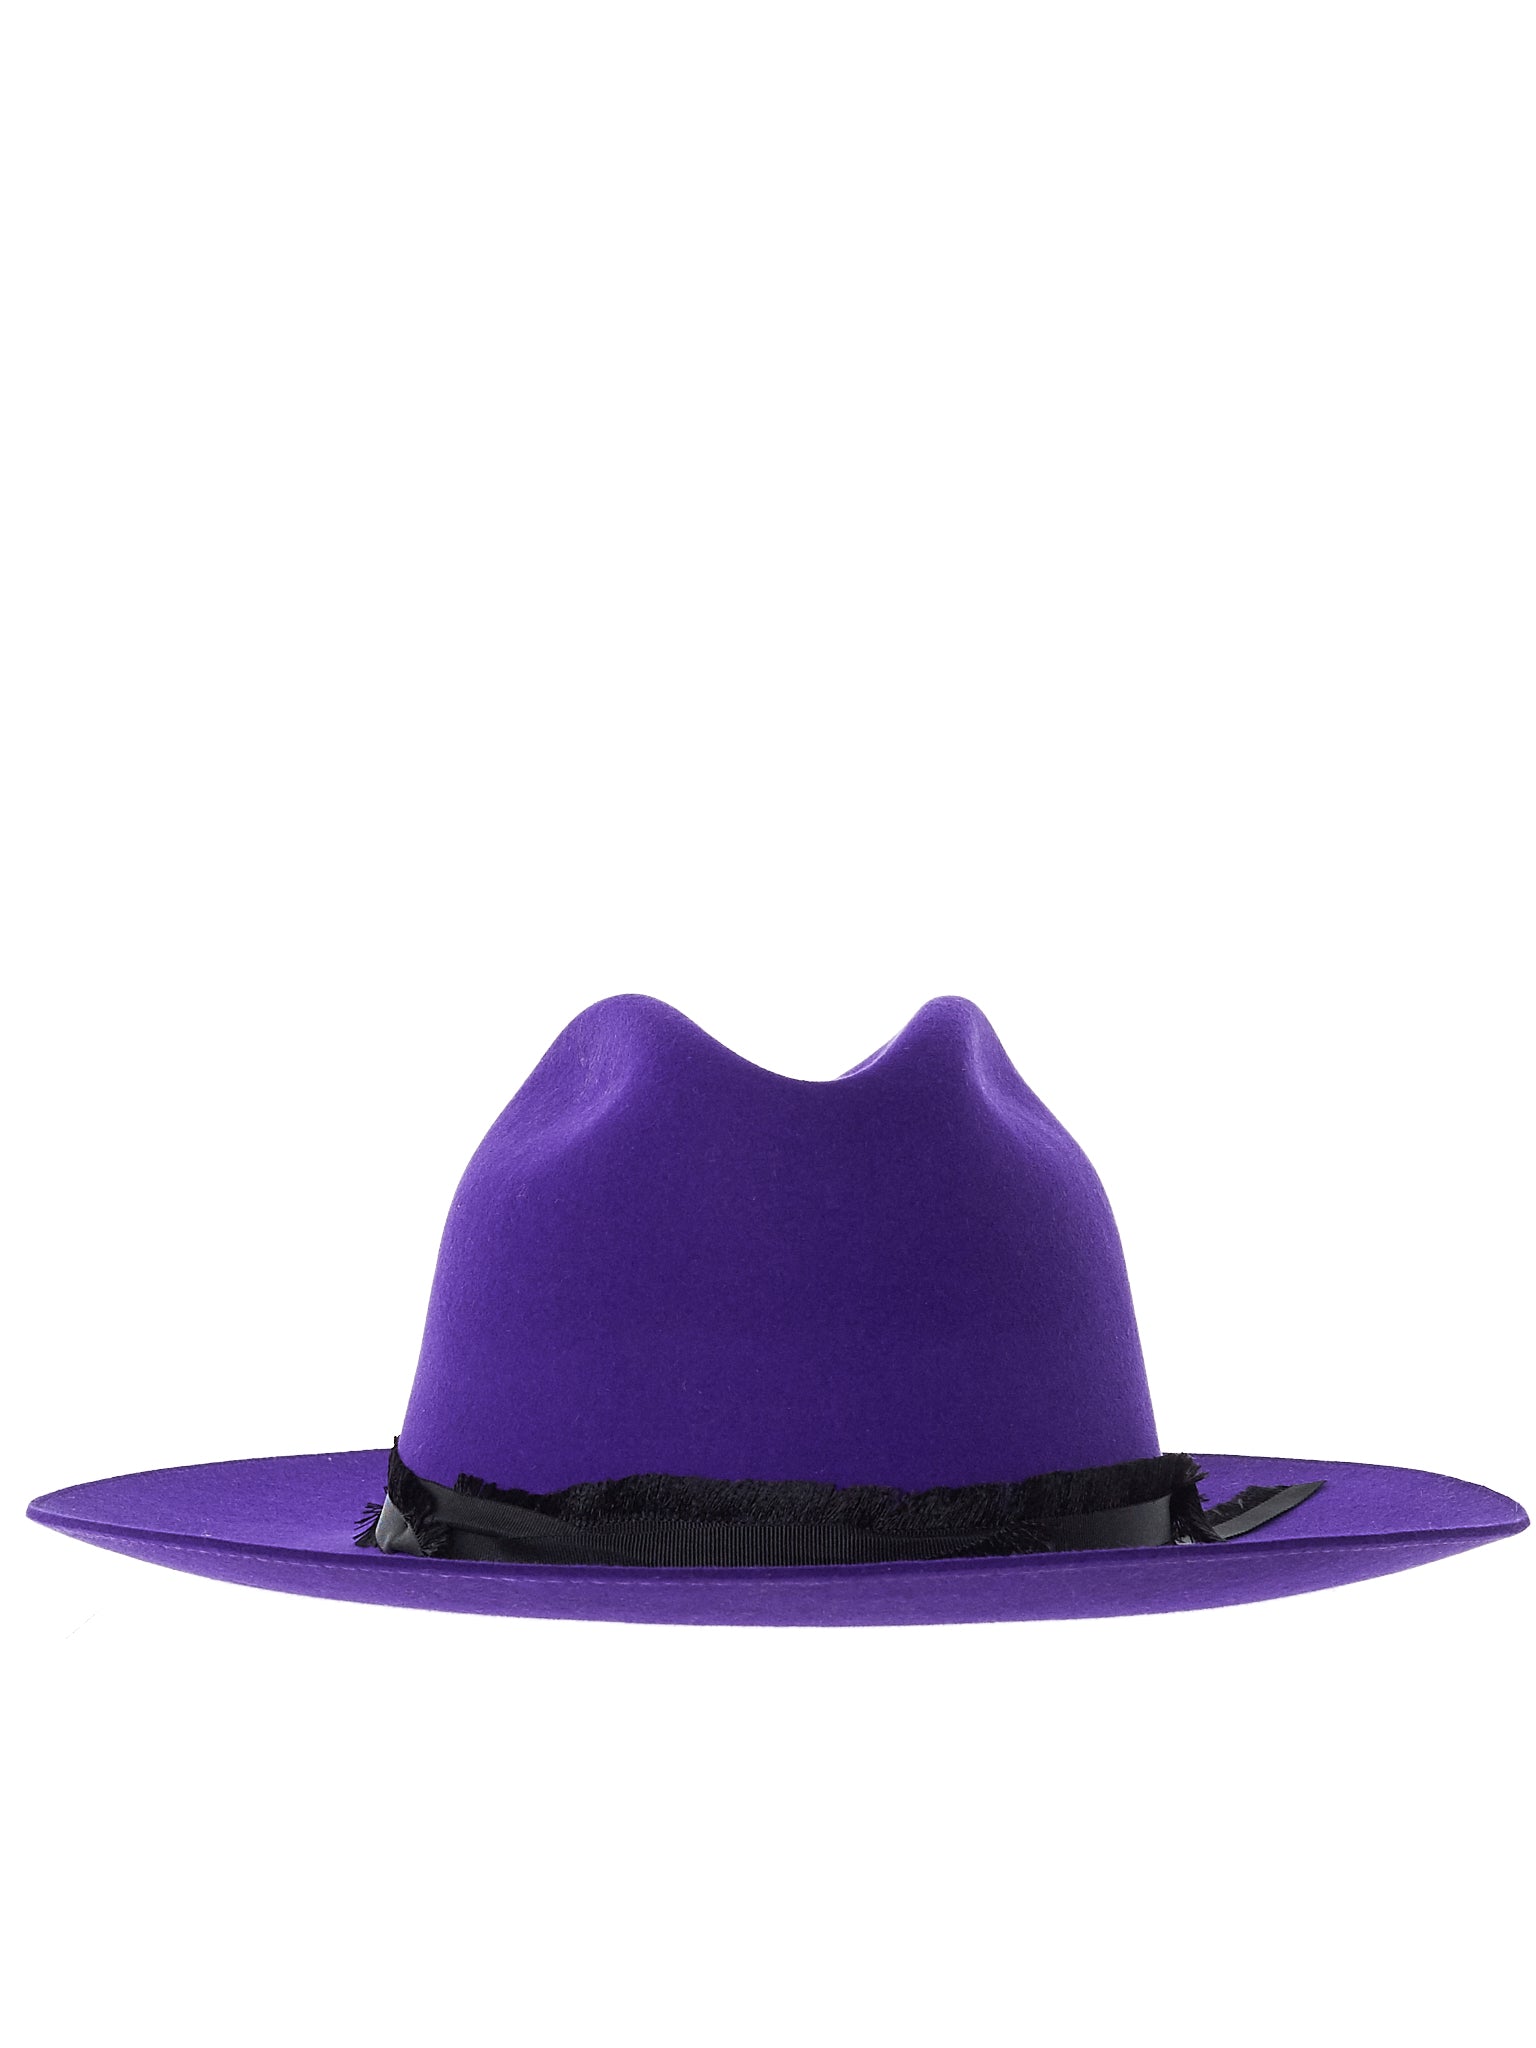 Cheyenne Purple 4.25 Brim Wool Pre-Creased Felt Hat by ProHats